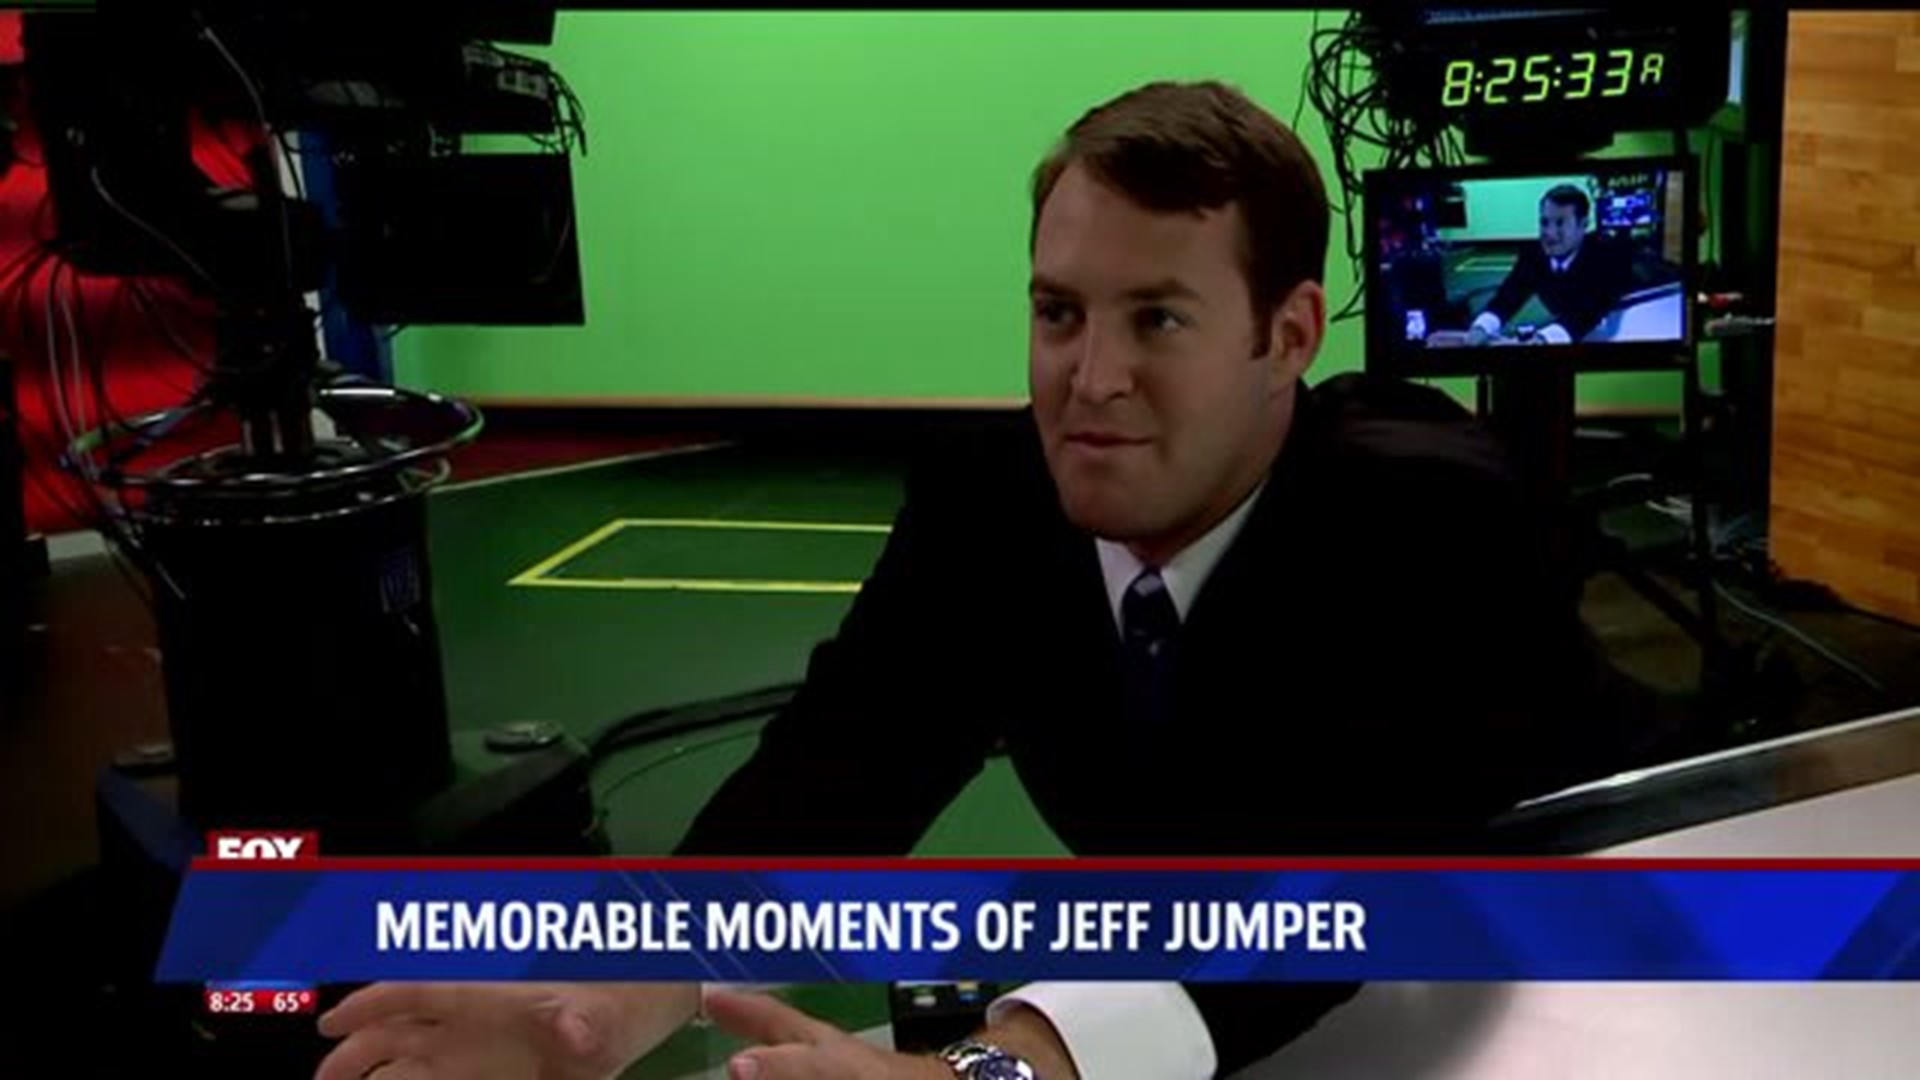 Memorable Jeff Jumper moments